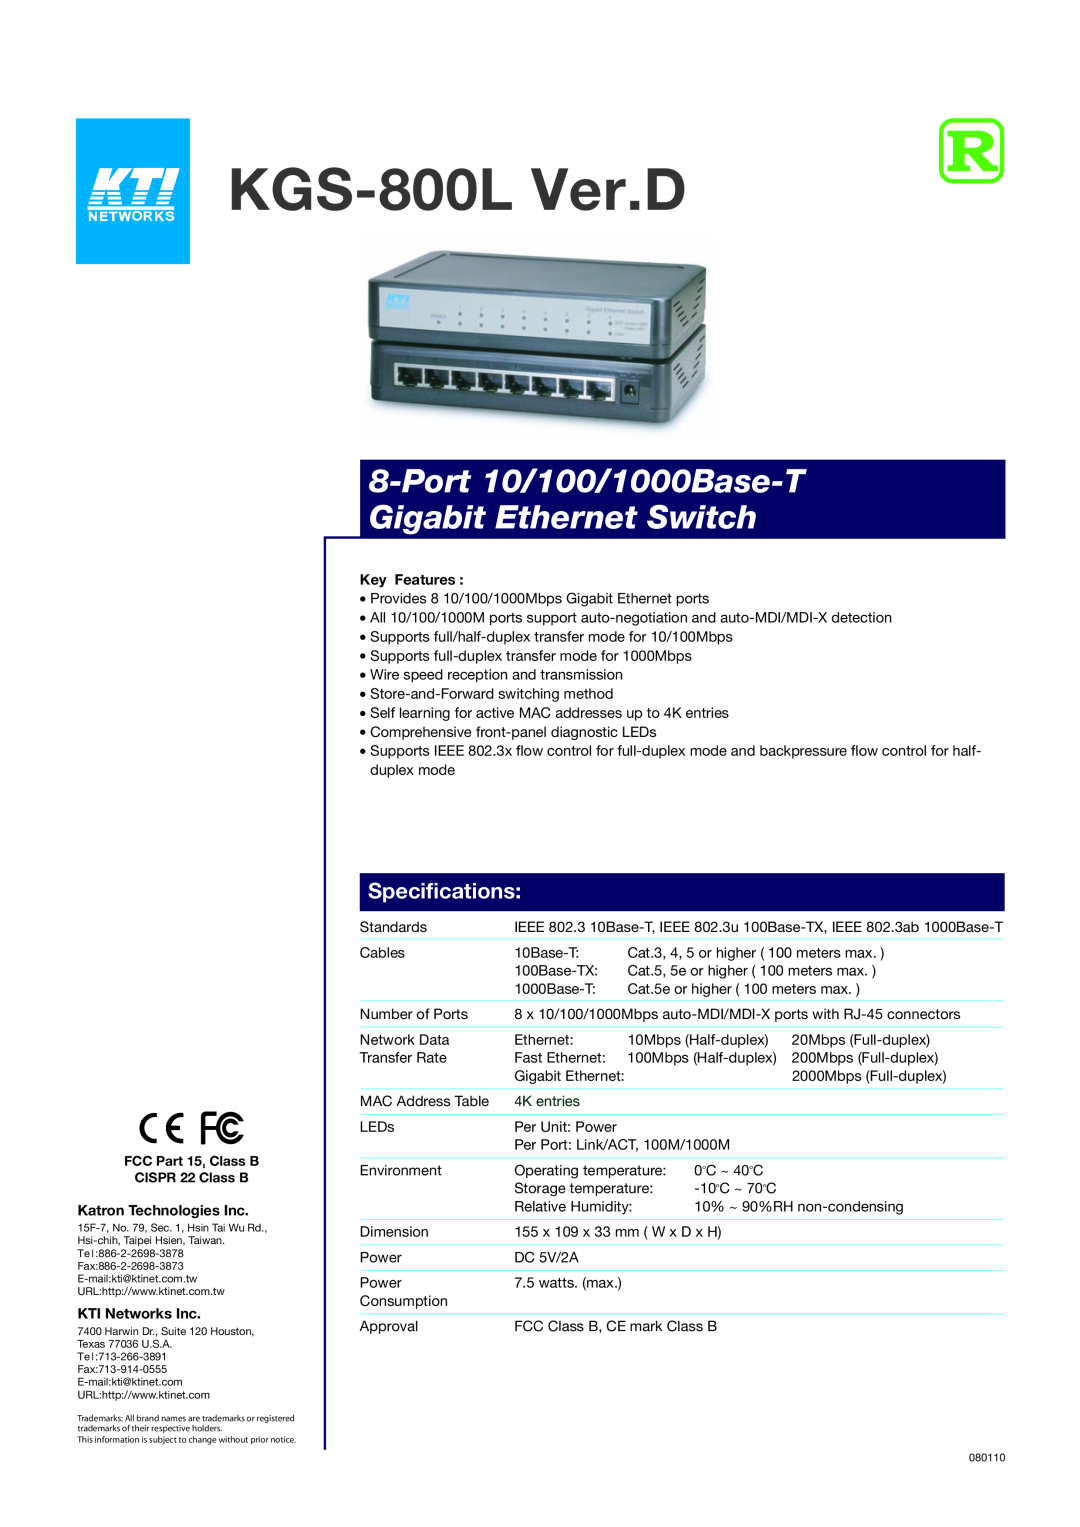 KTI Networks specifications KGS-800L Ver.D, Port 10/100/1000Base-T Gigabit Ethernet Switch, Specifications 